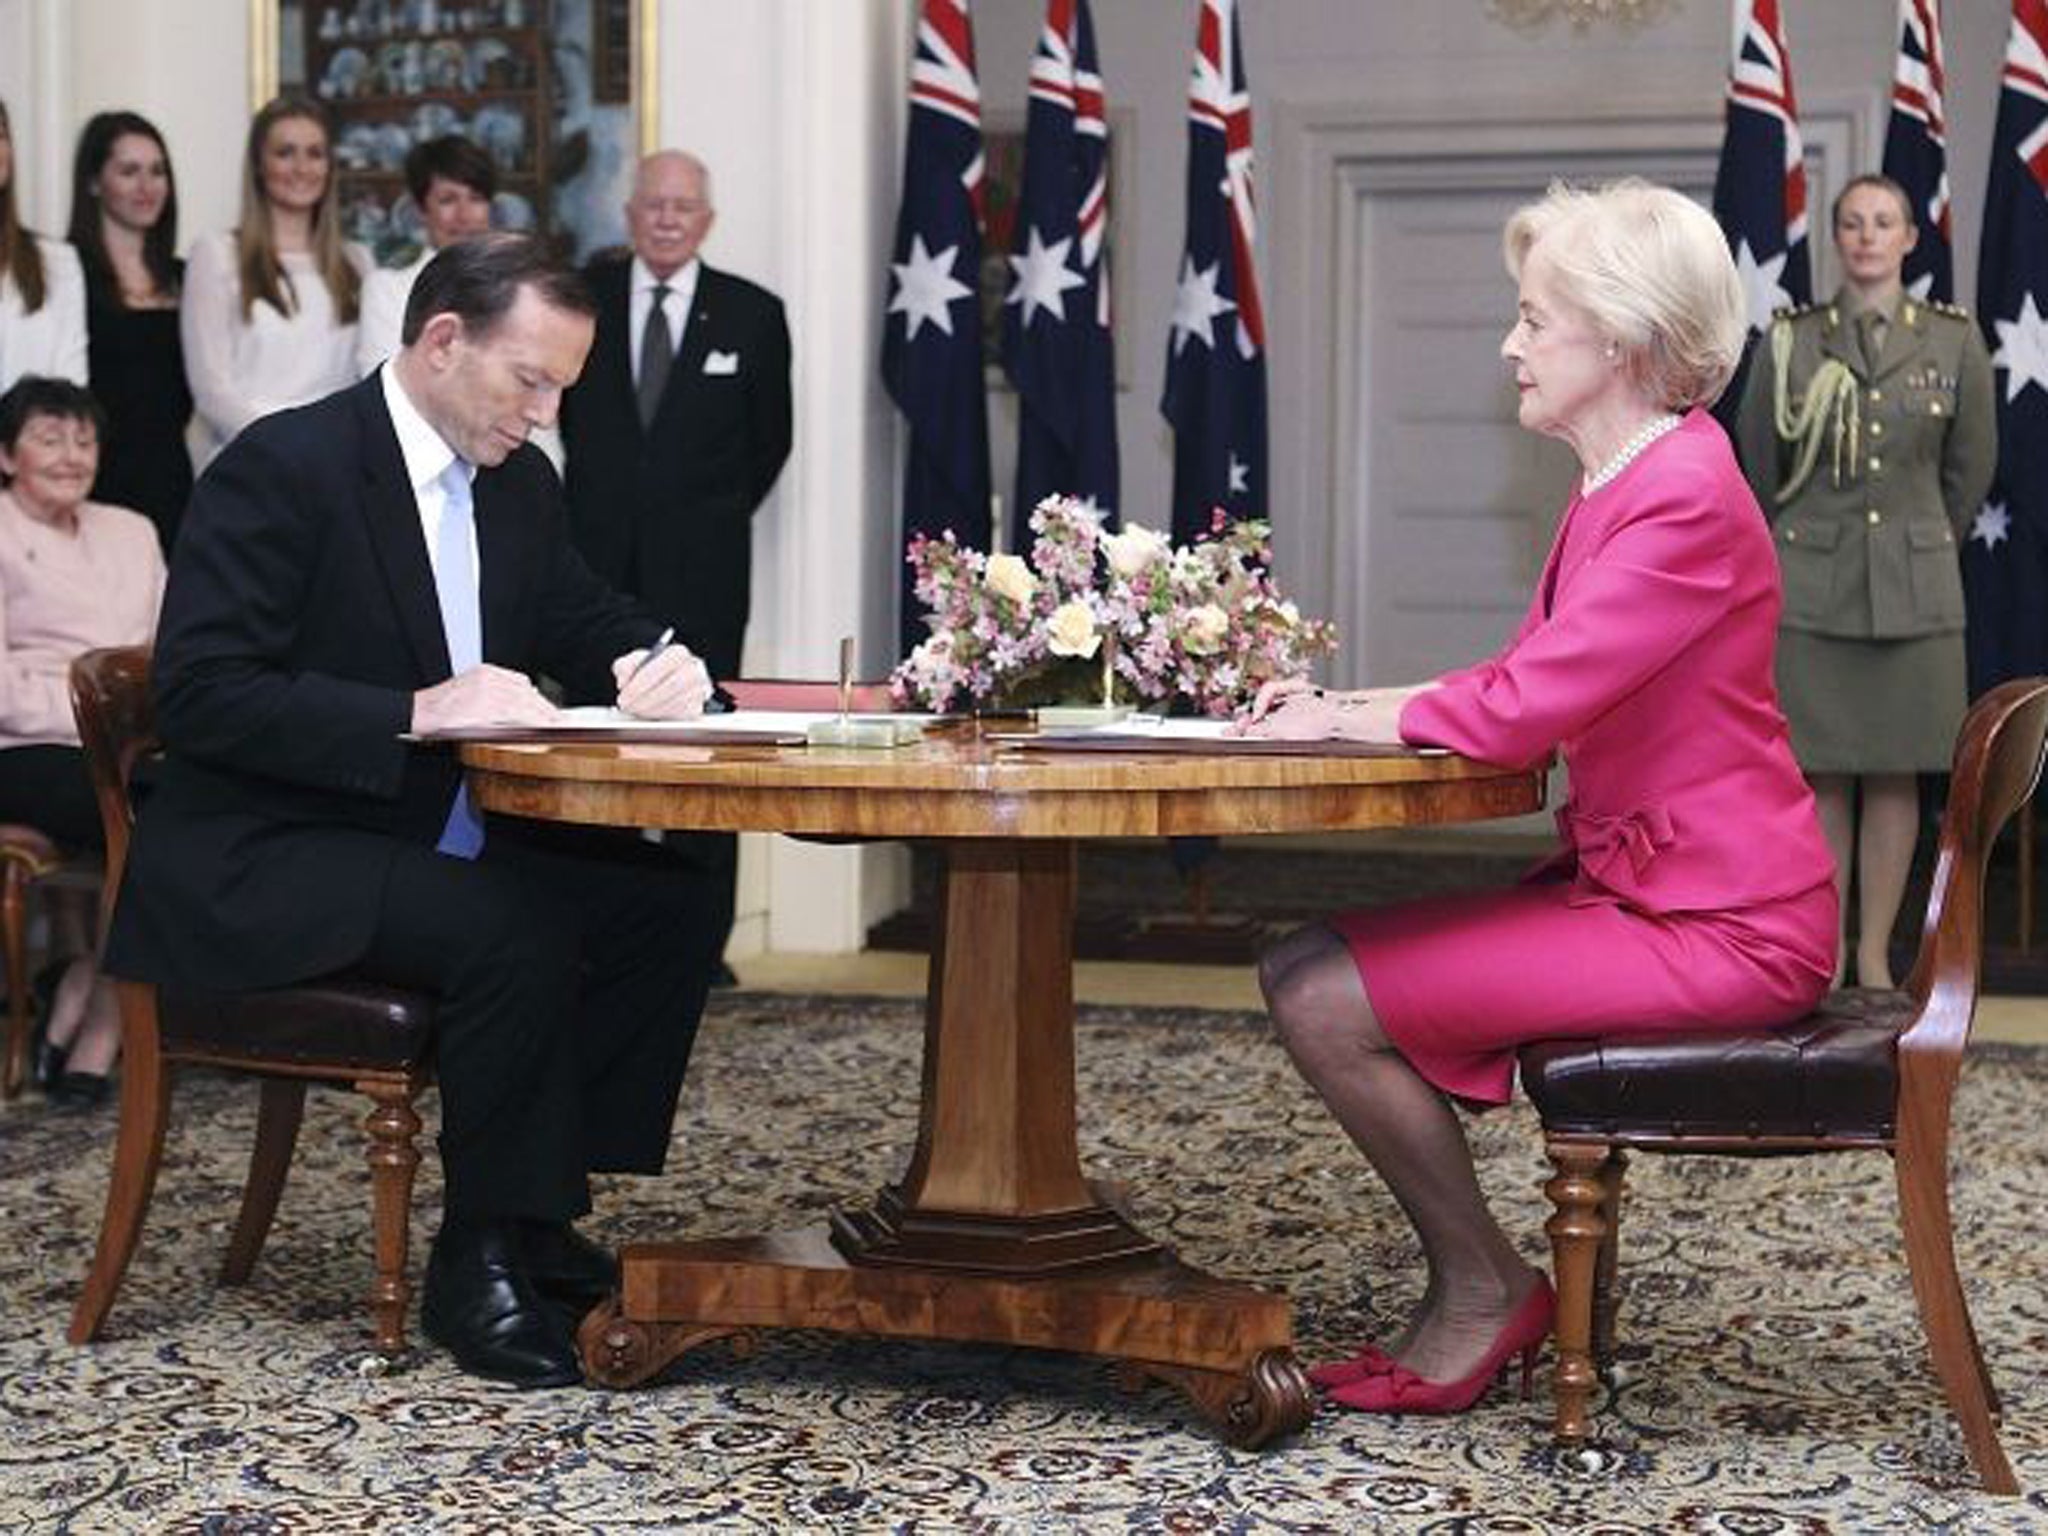 Tony Abbott is sworn in as the 28th Prime Minister of Australia